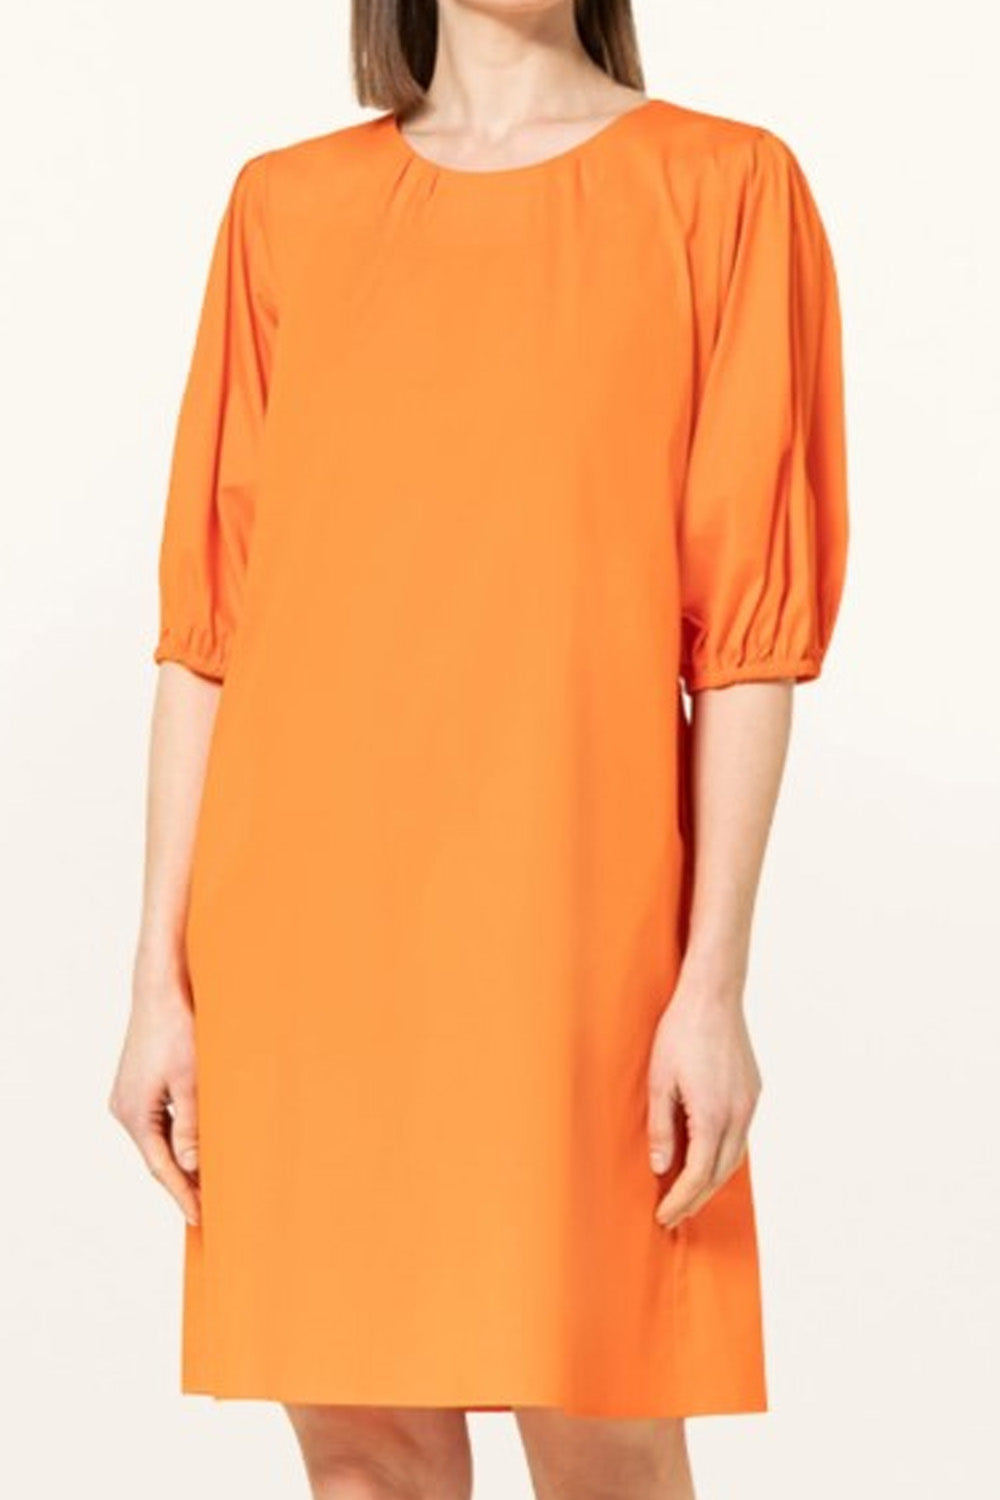 Haven Orange Dress